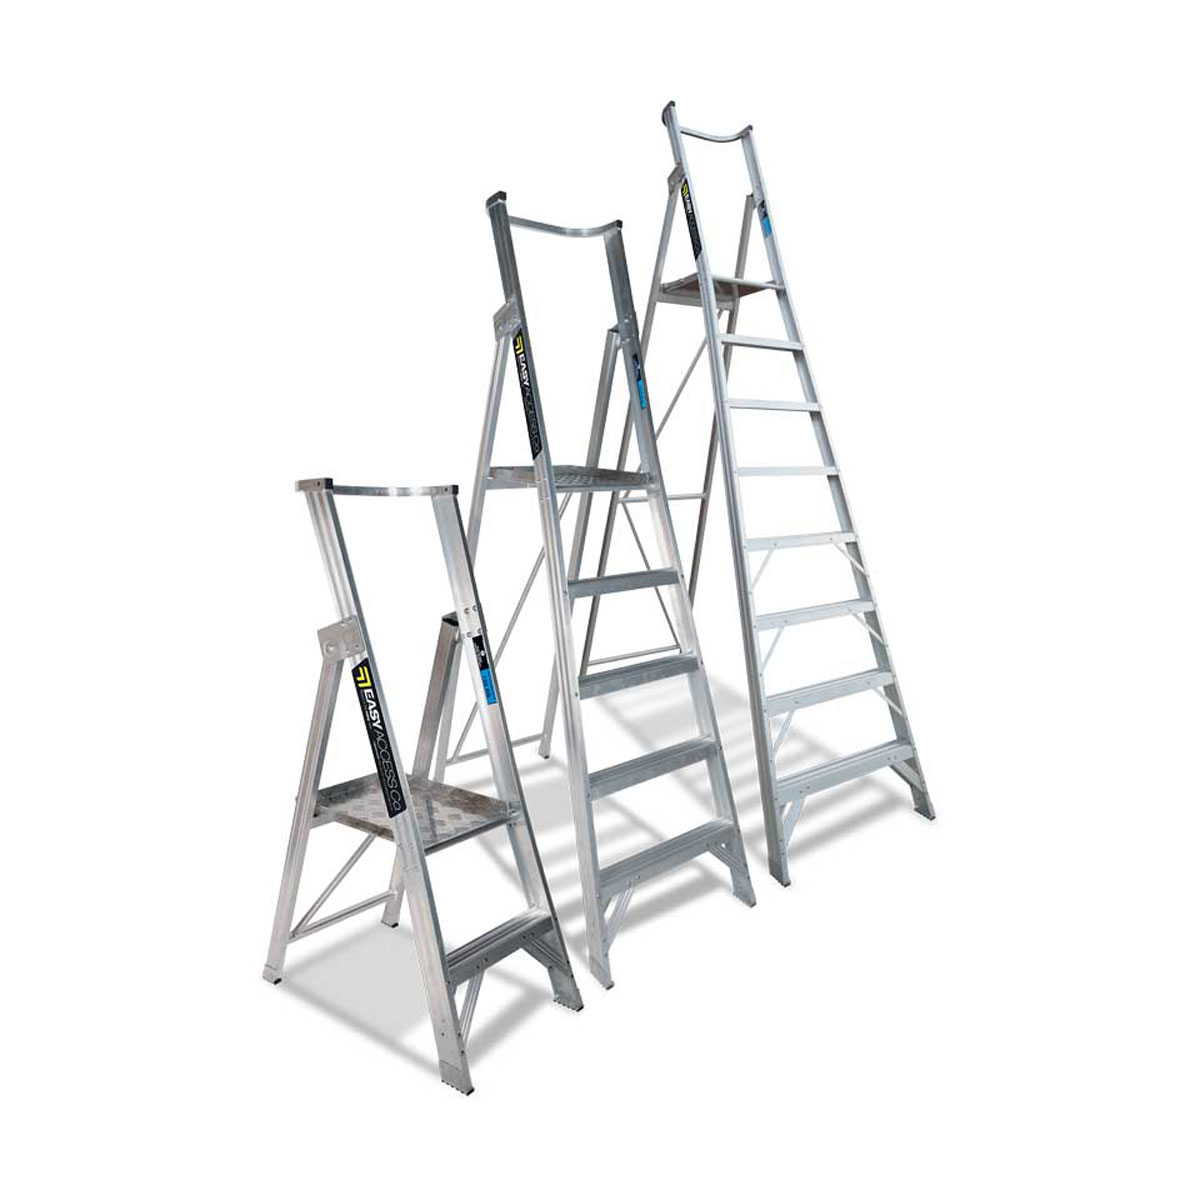 Platform Ladder Suppliers New Zealand